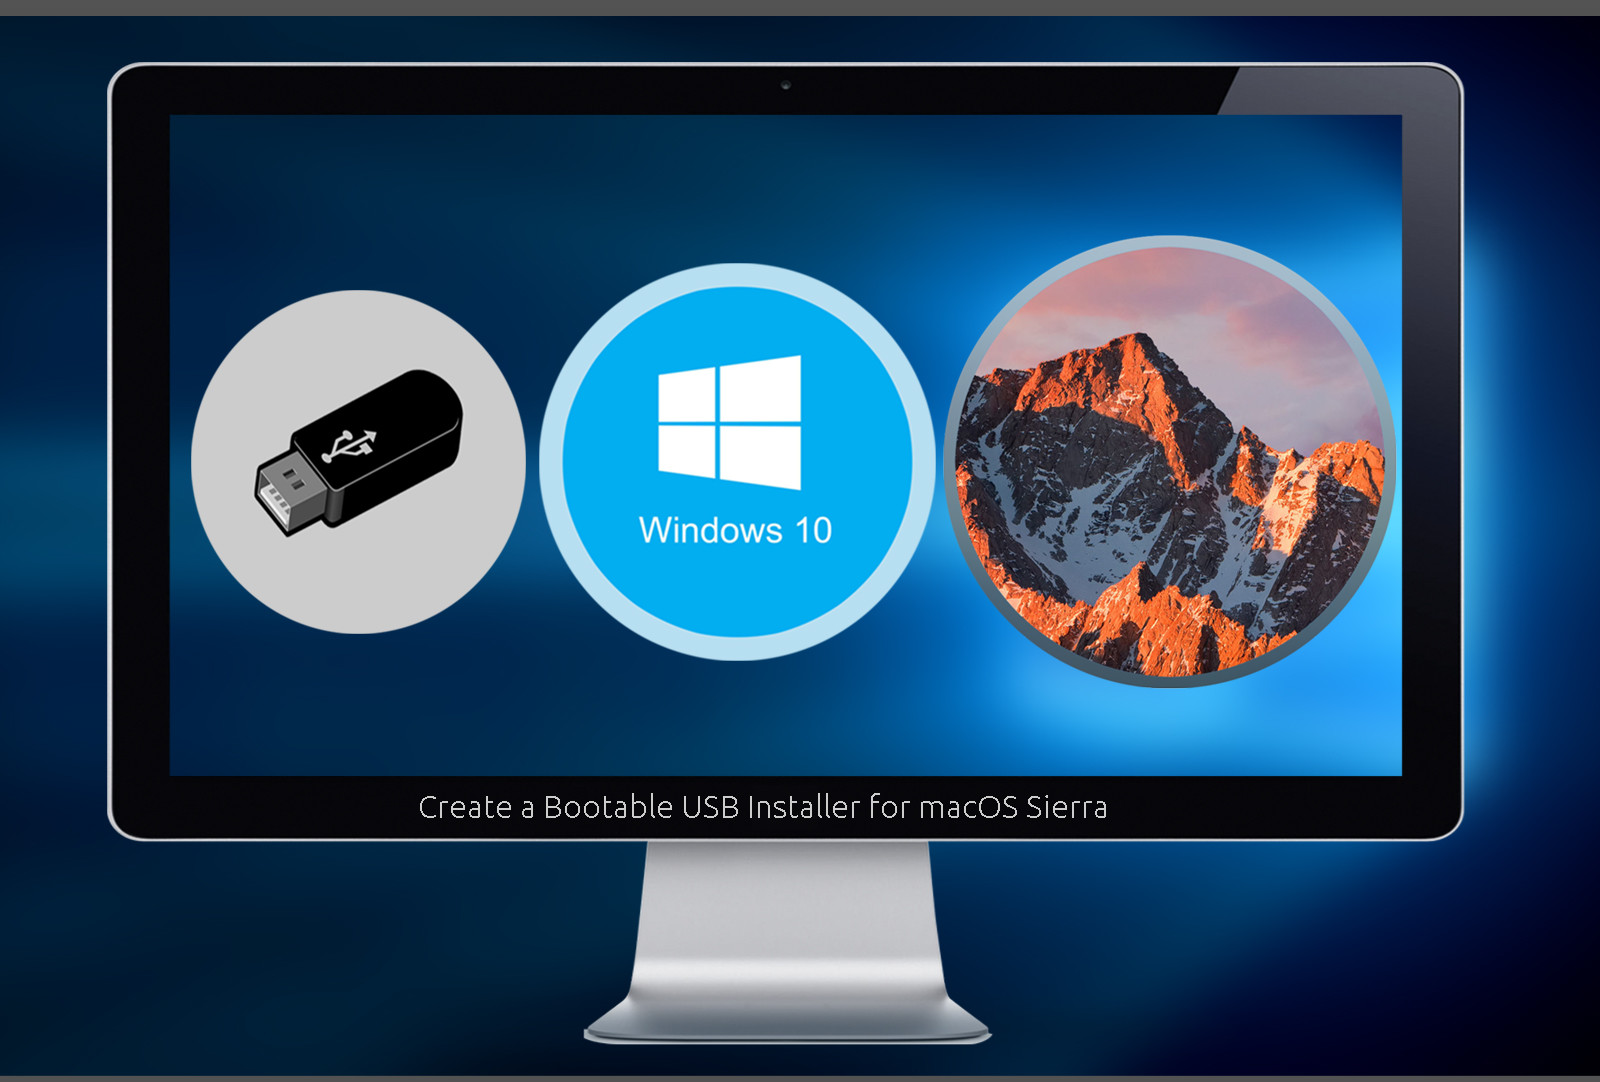 osx sierra download for windows 7 usb startup